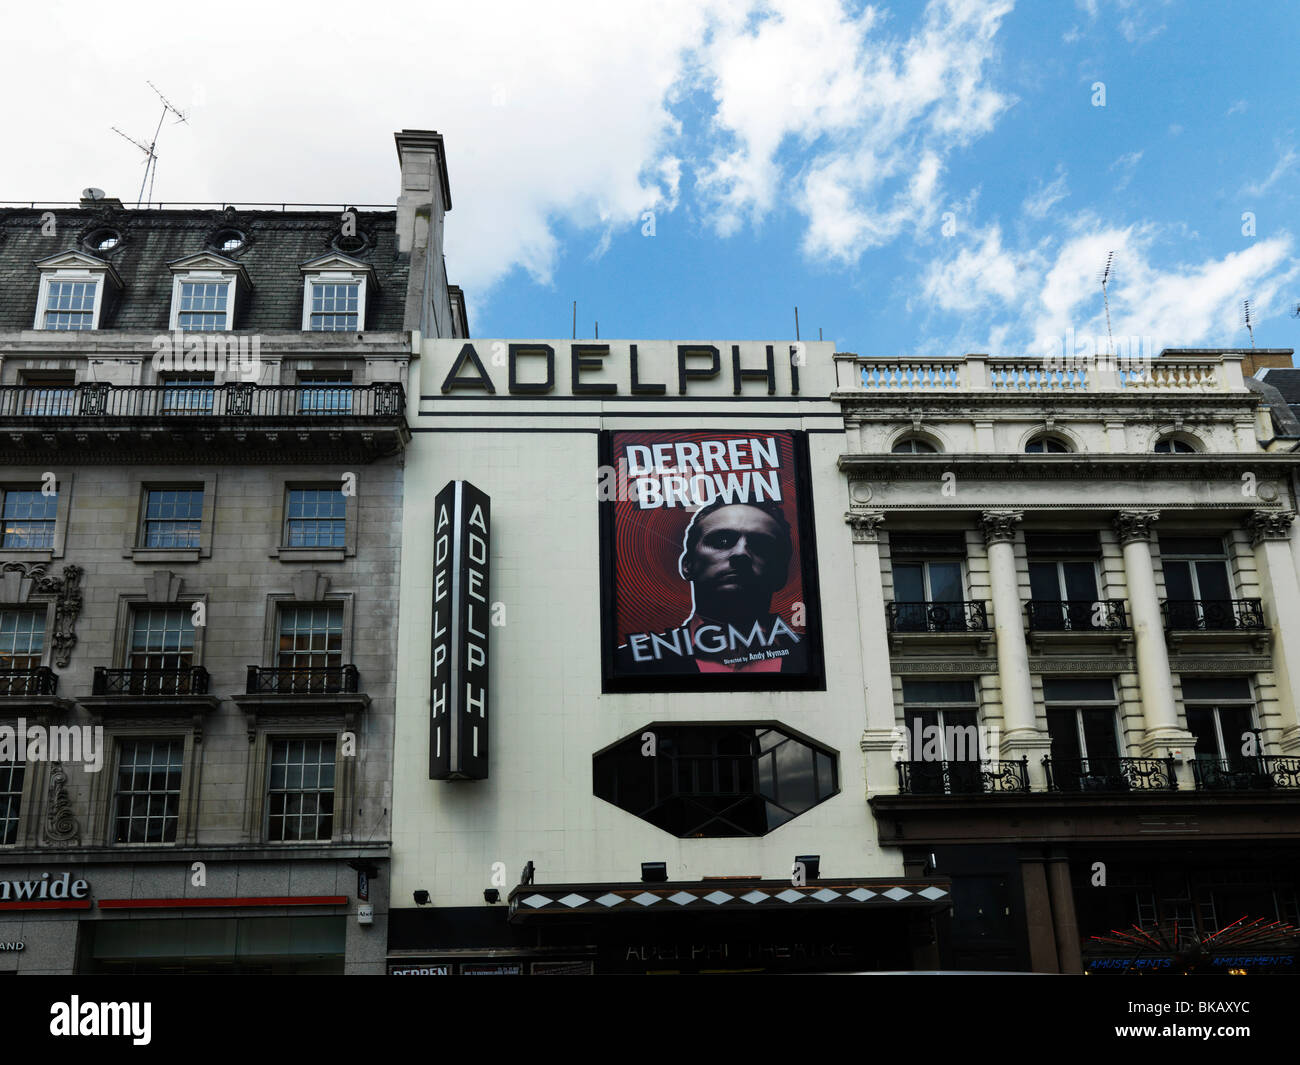 London England Strand Adelphi Theatre Poster von Derren Brown Enigma Stockfoto